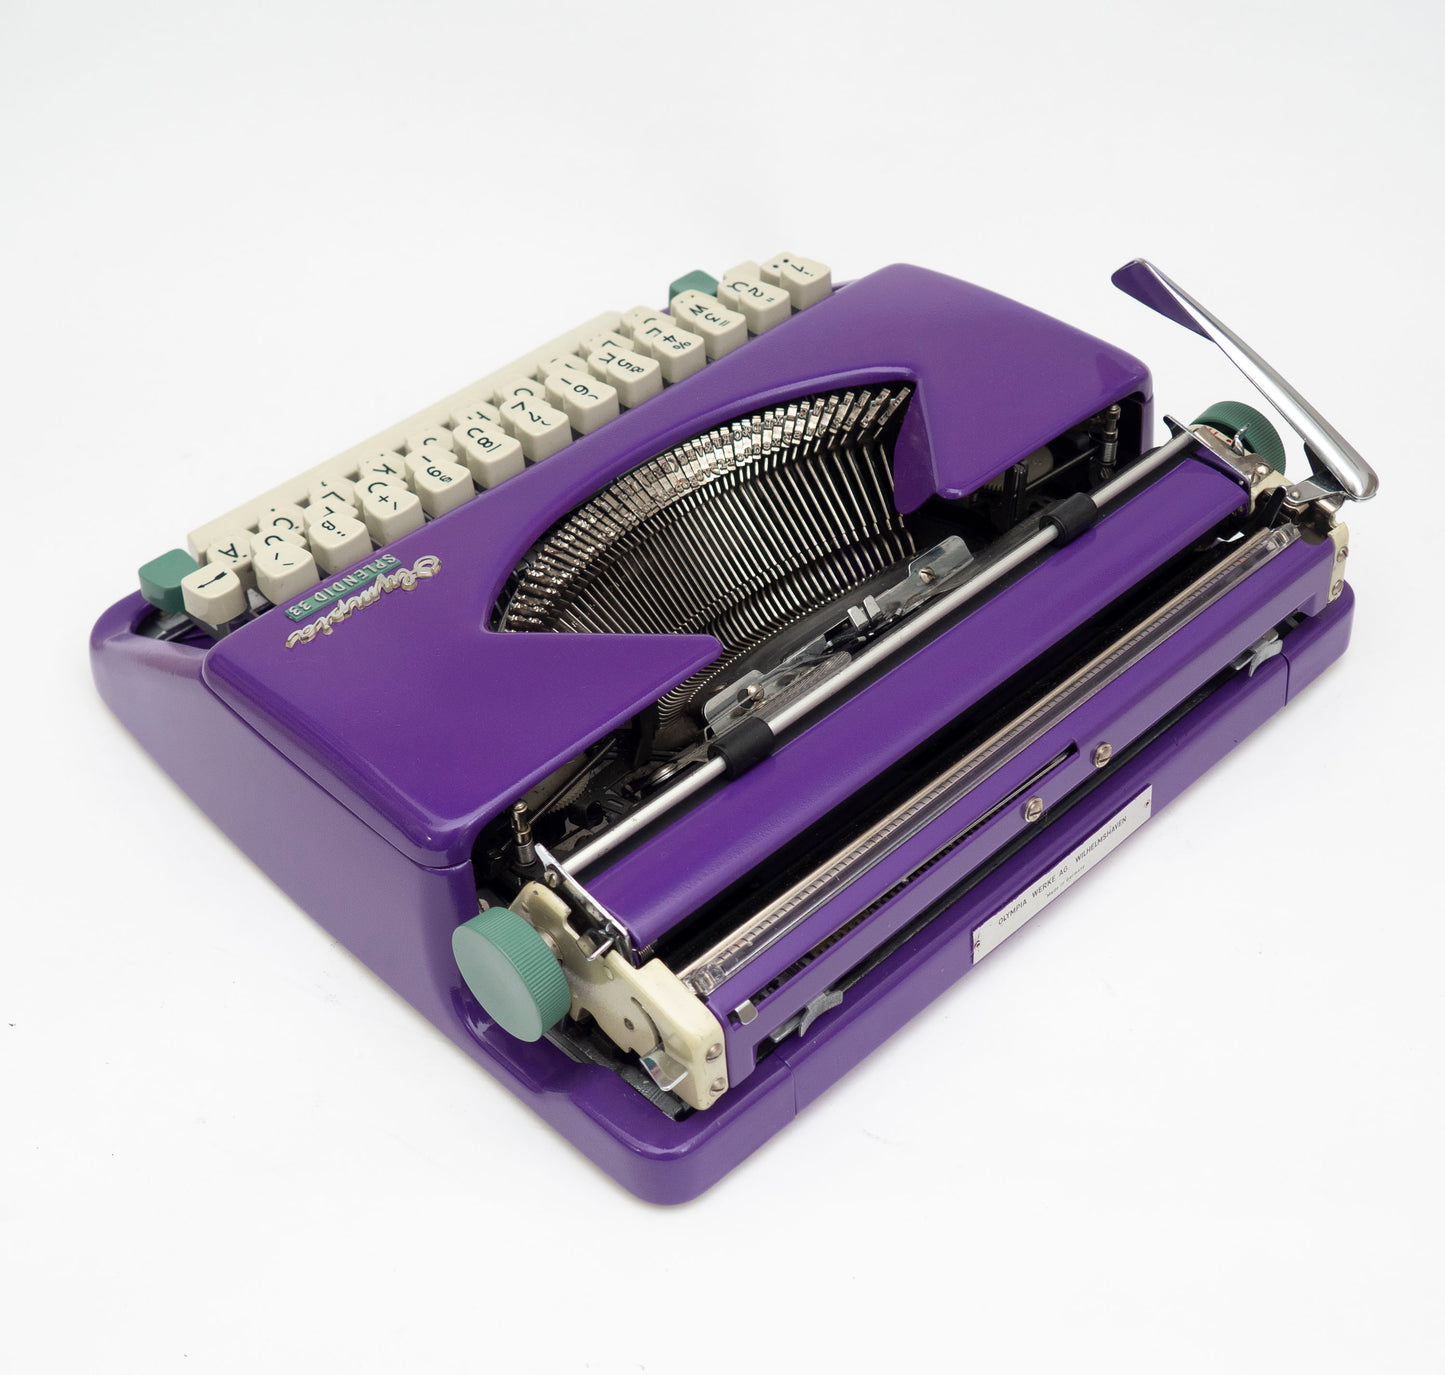 Portable Typewriter Purple with Case, Olympia Splendid 33